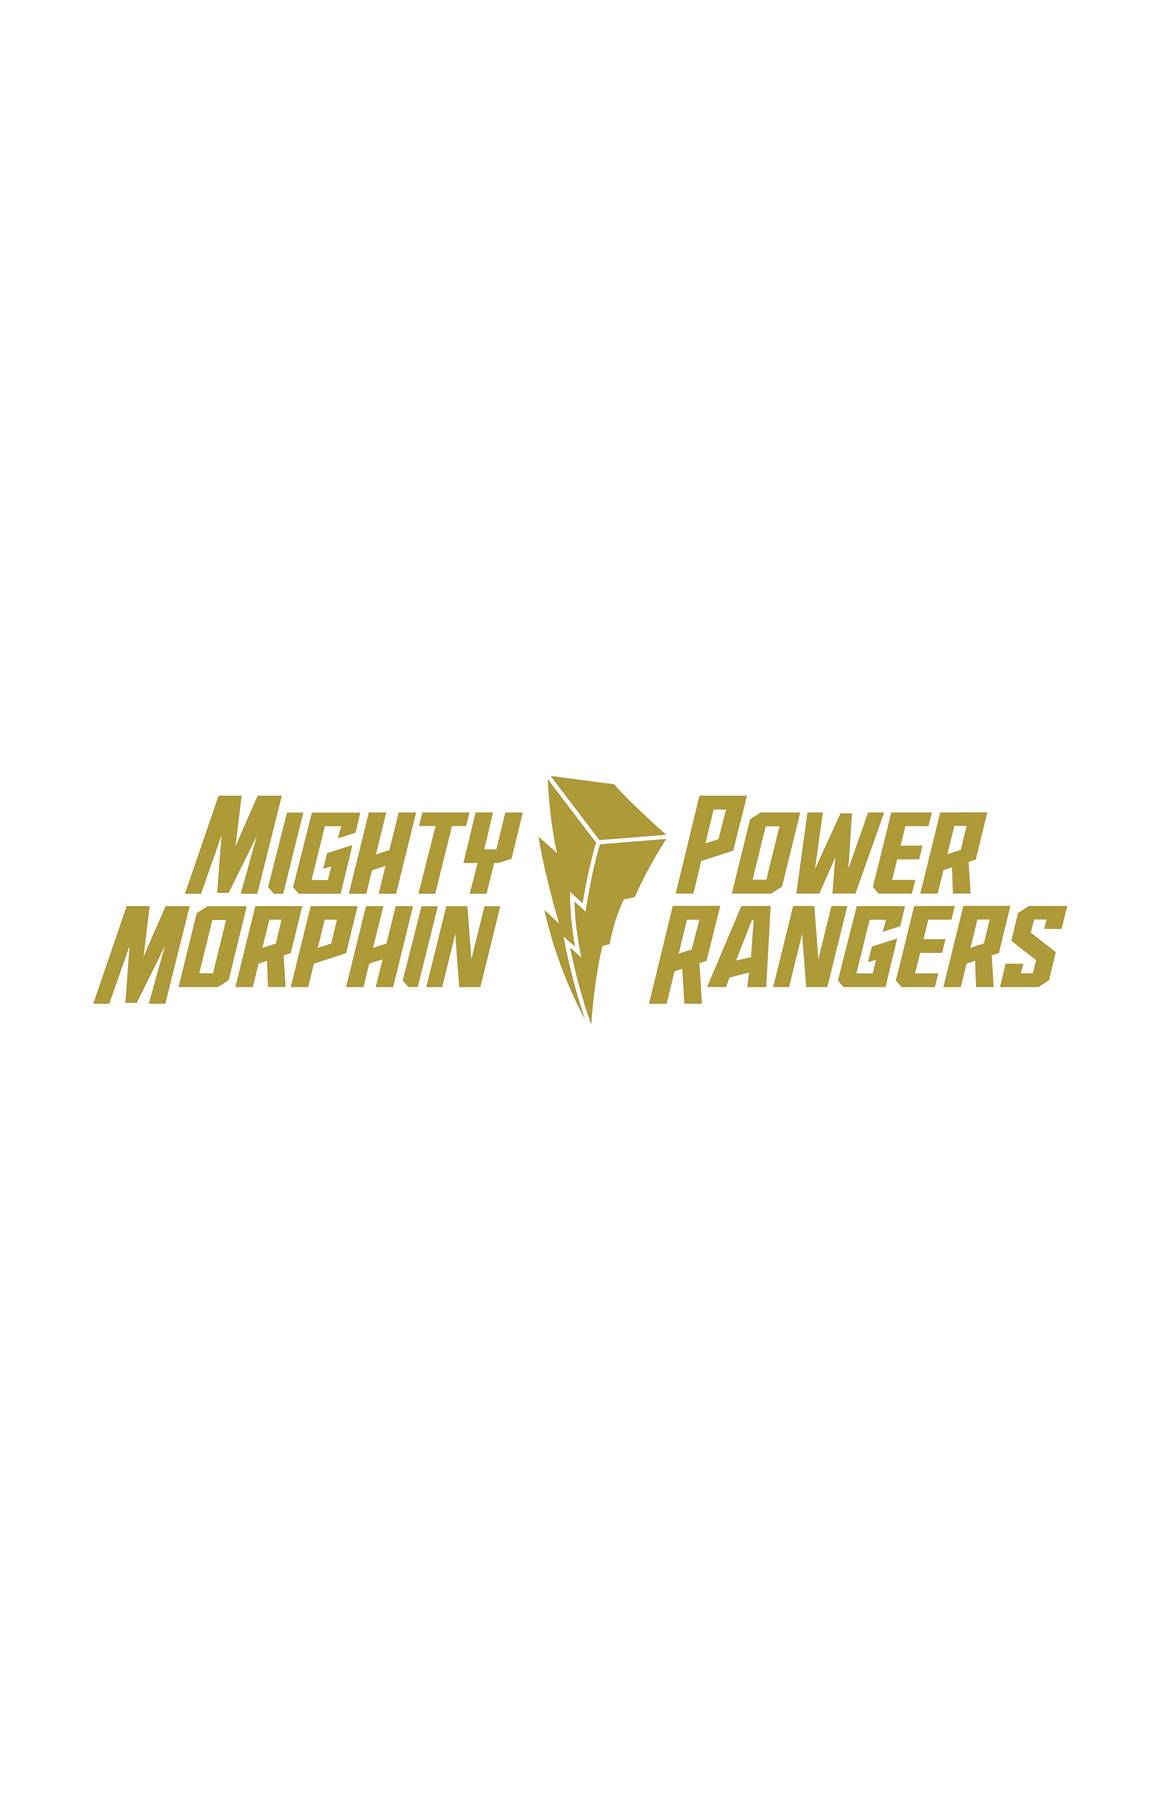 MIGHTY MORPHIN / POWER RANGERS #1 LTD ED HC